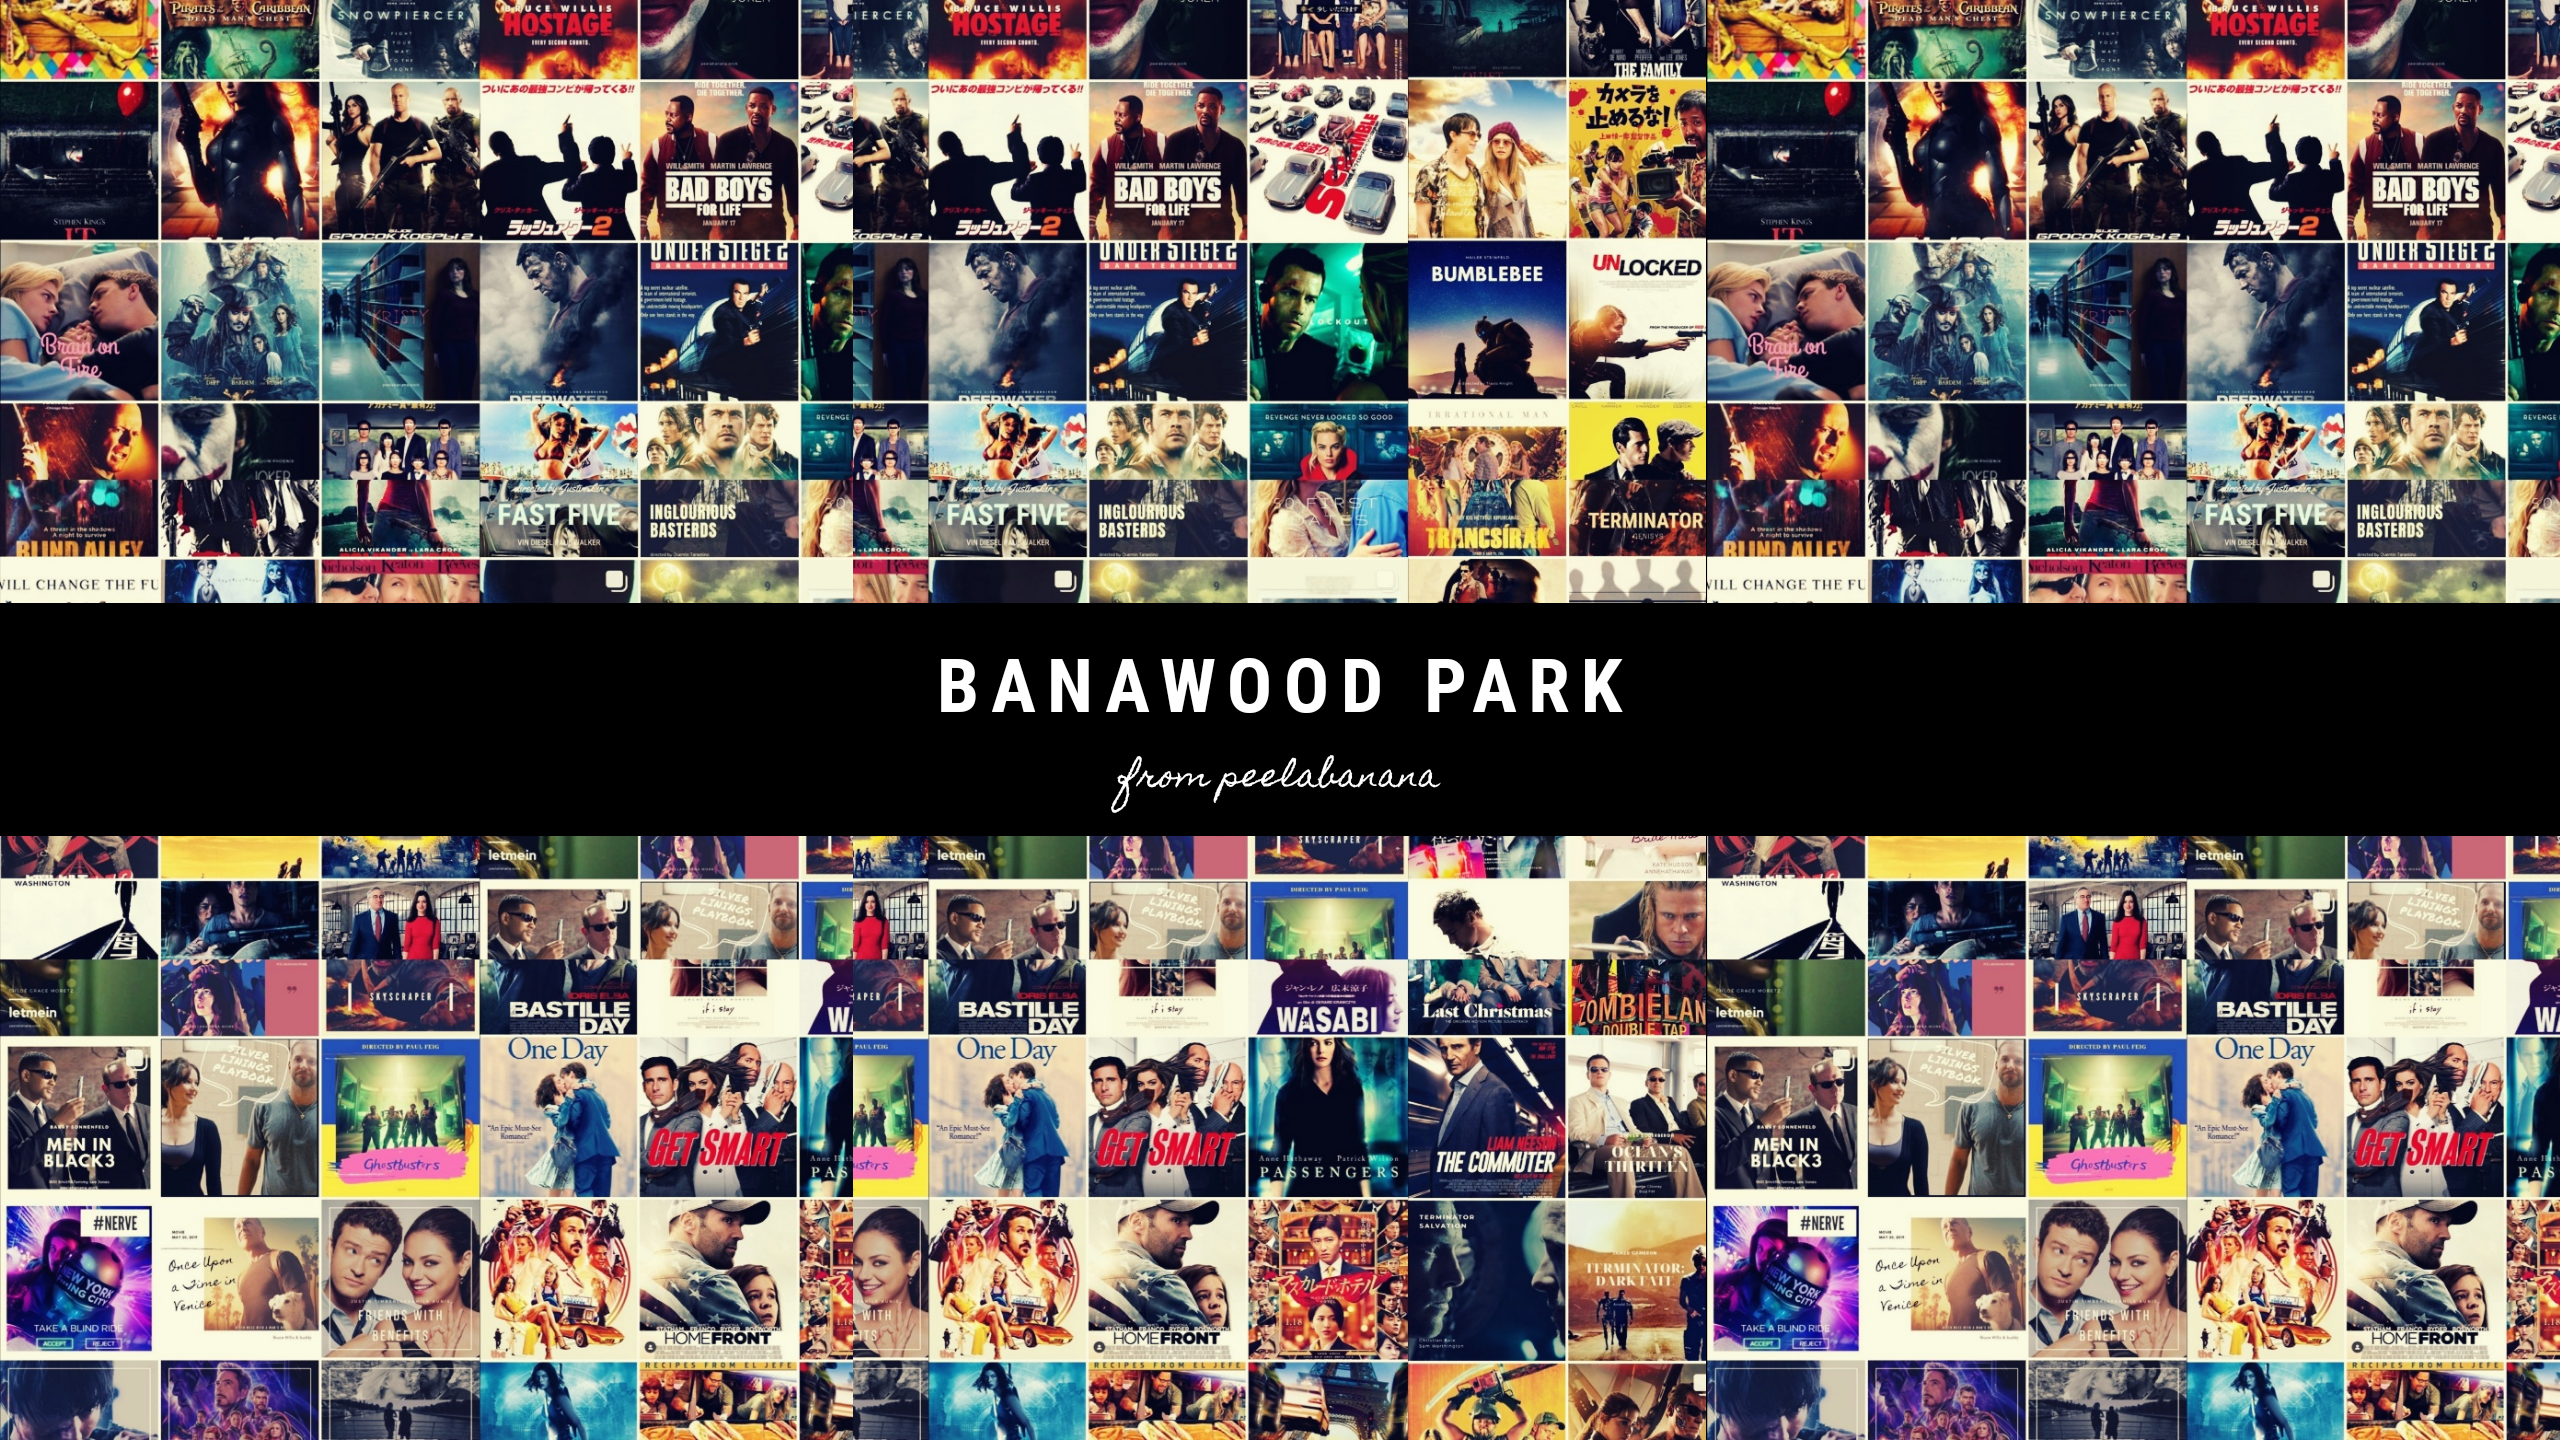 BANAWOOD PARK